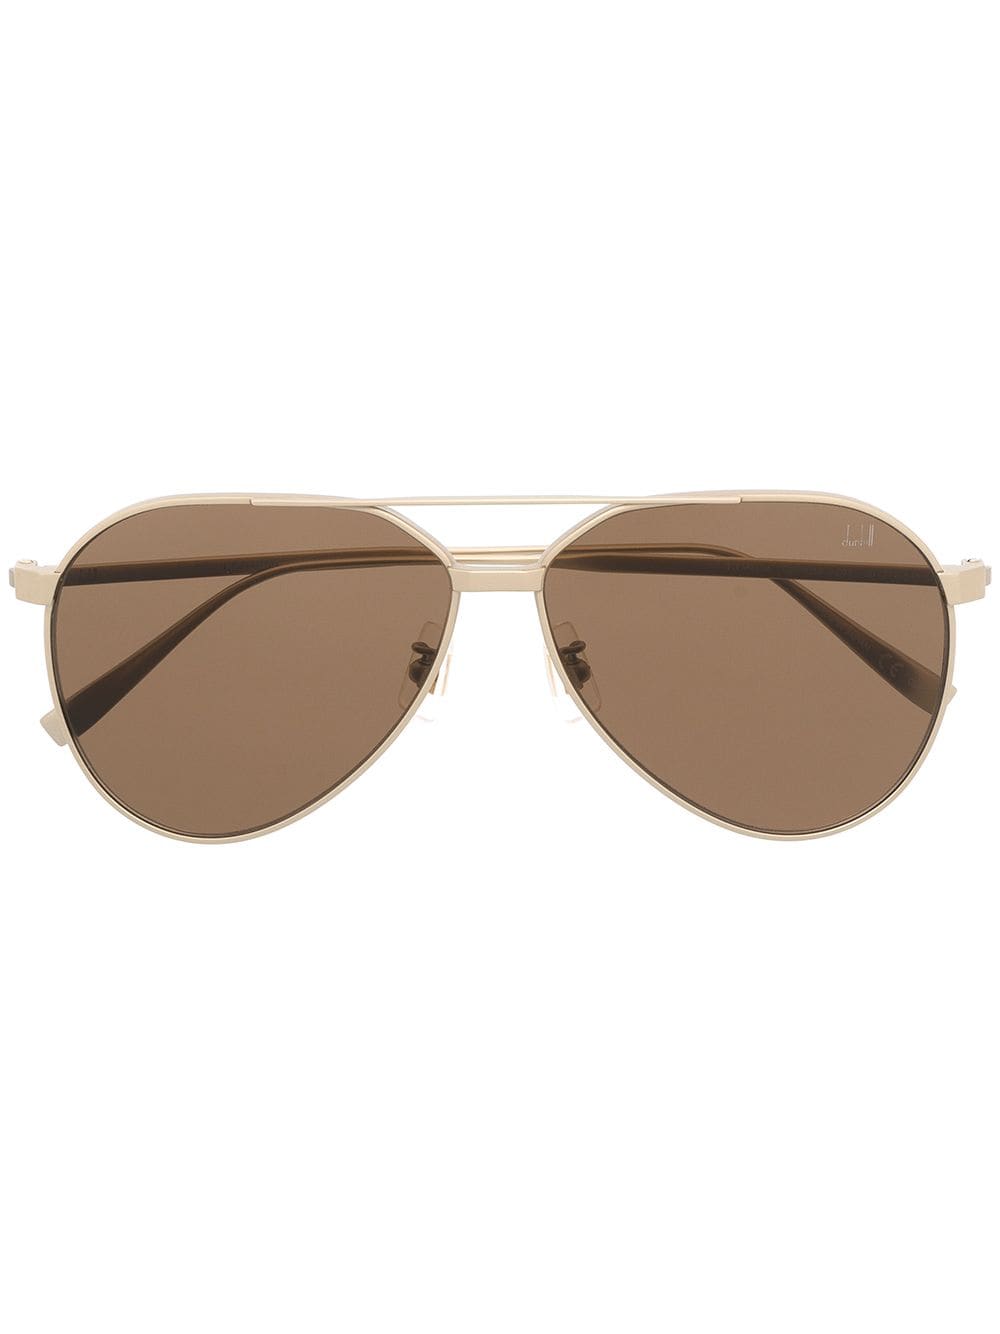 Dunhill classic pilot sunglasses - Gold